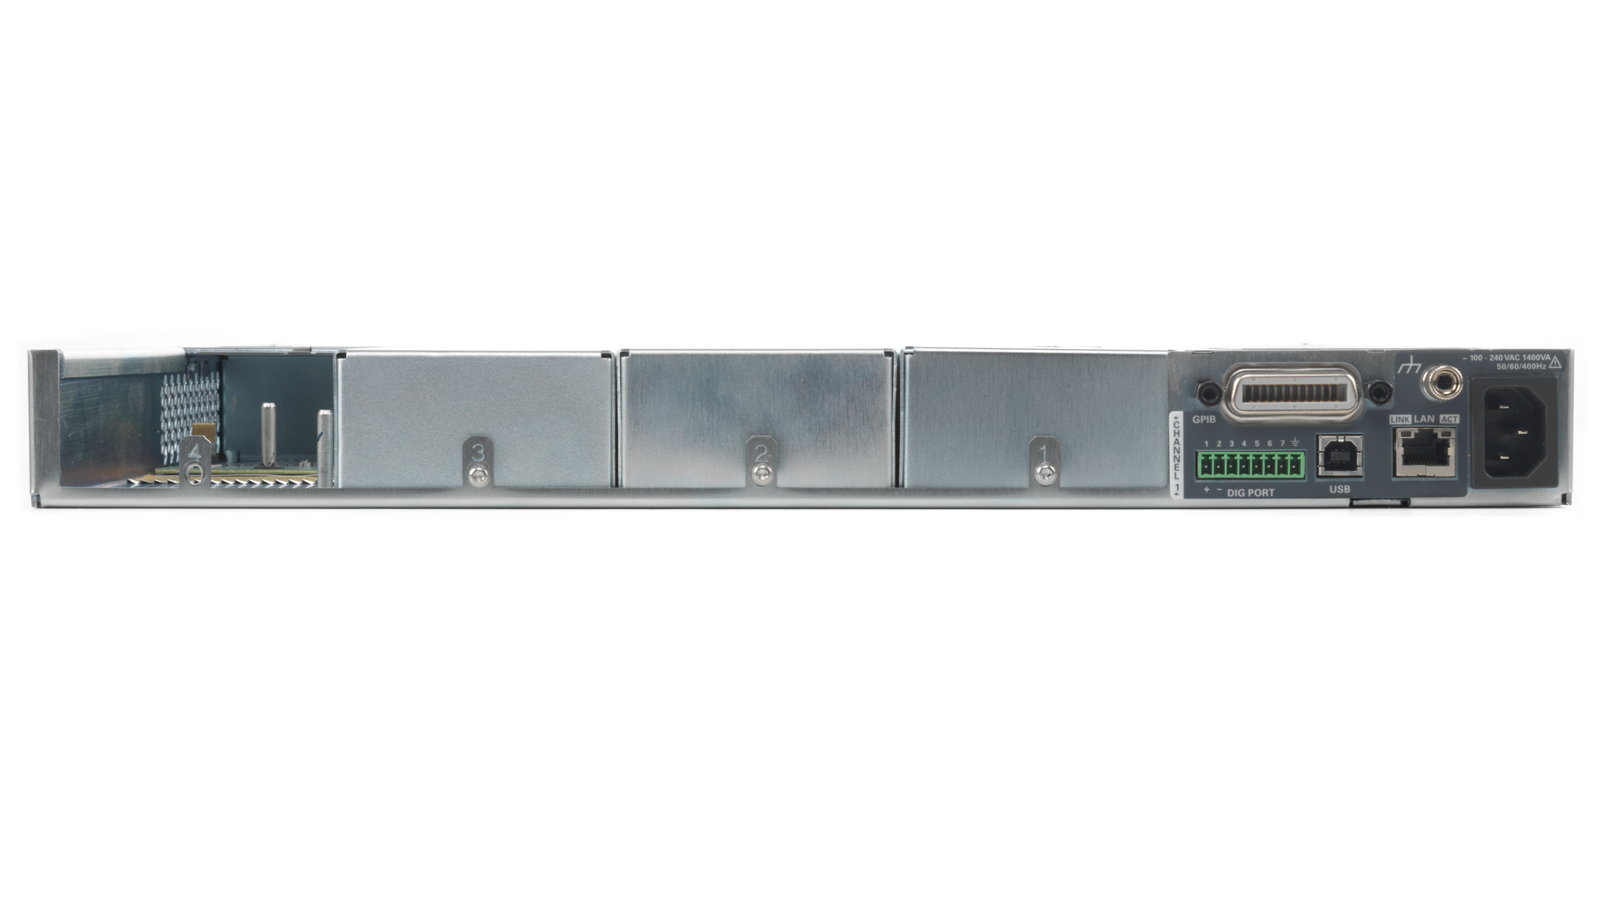 N6700 series modular power supply - Back panel